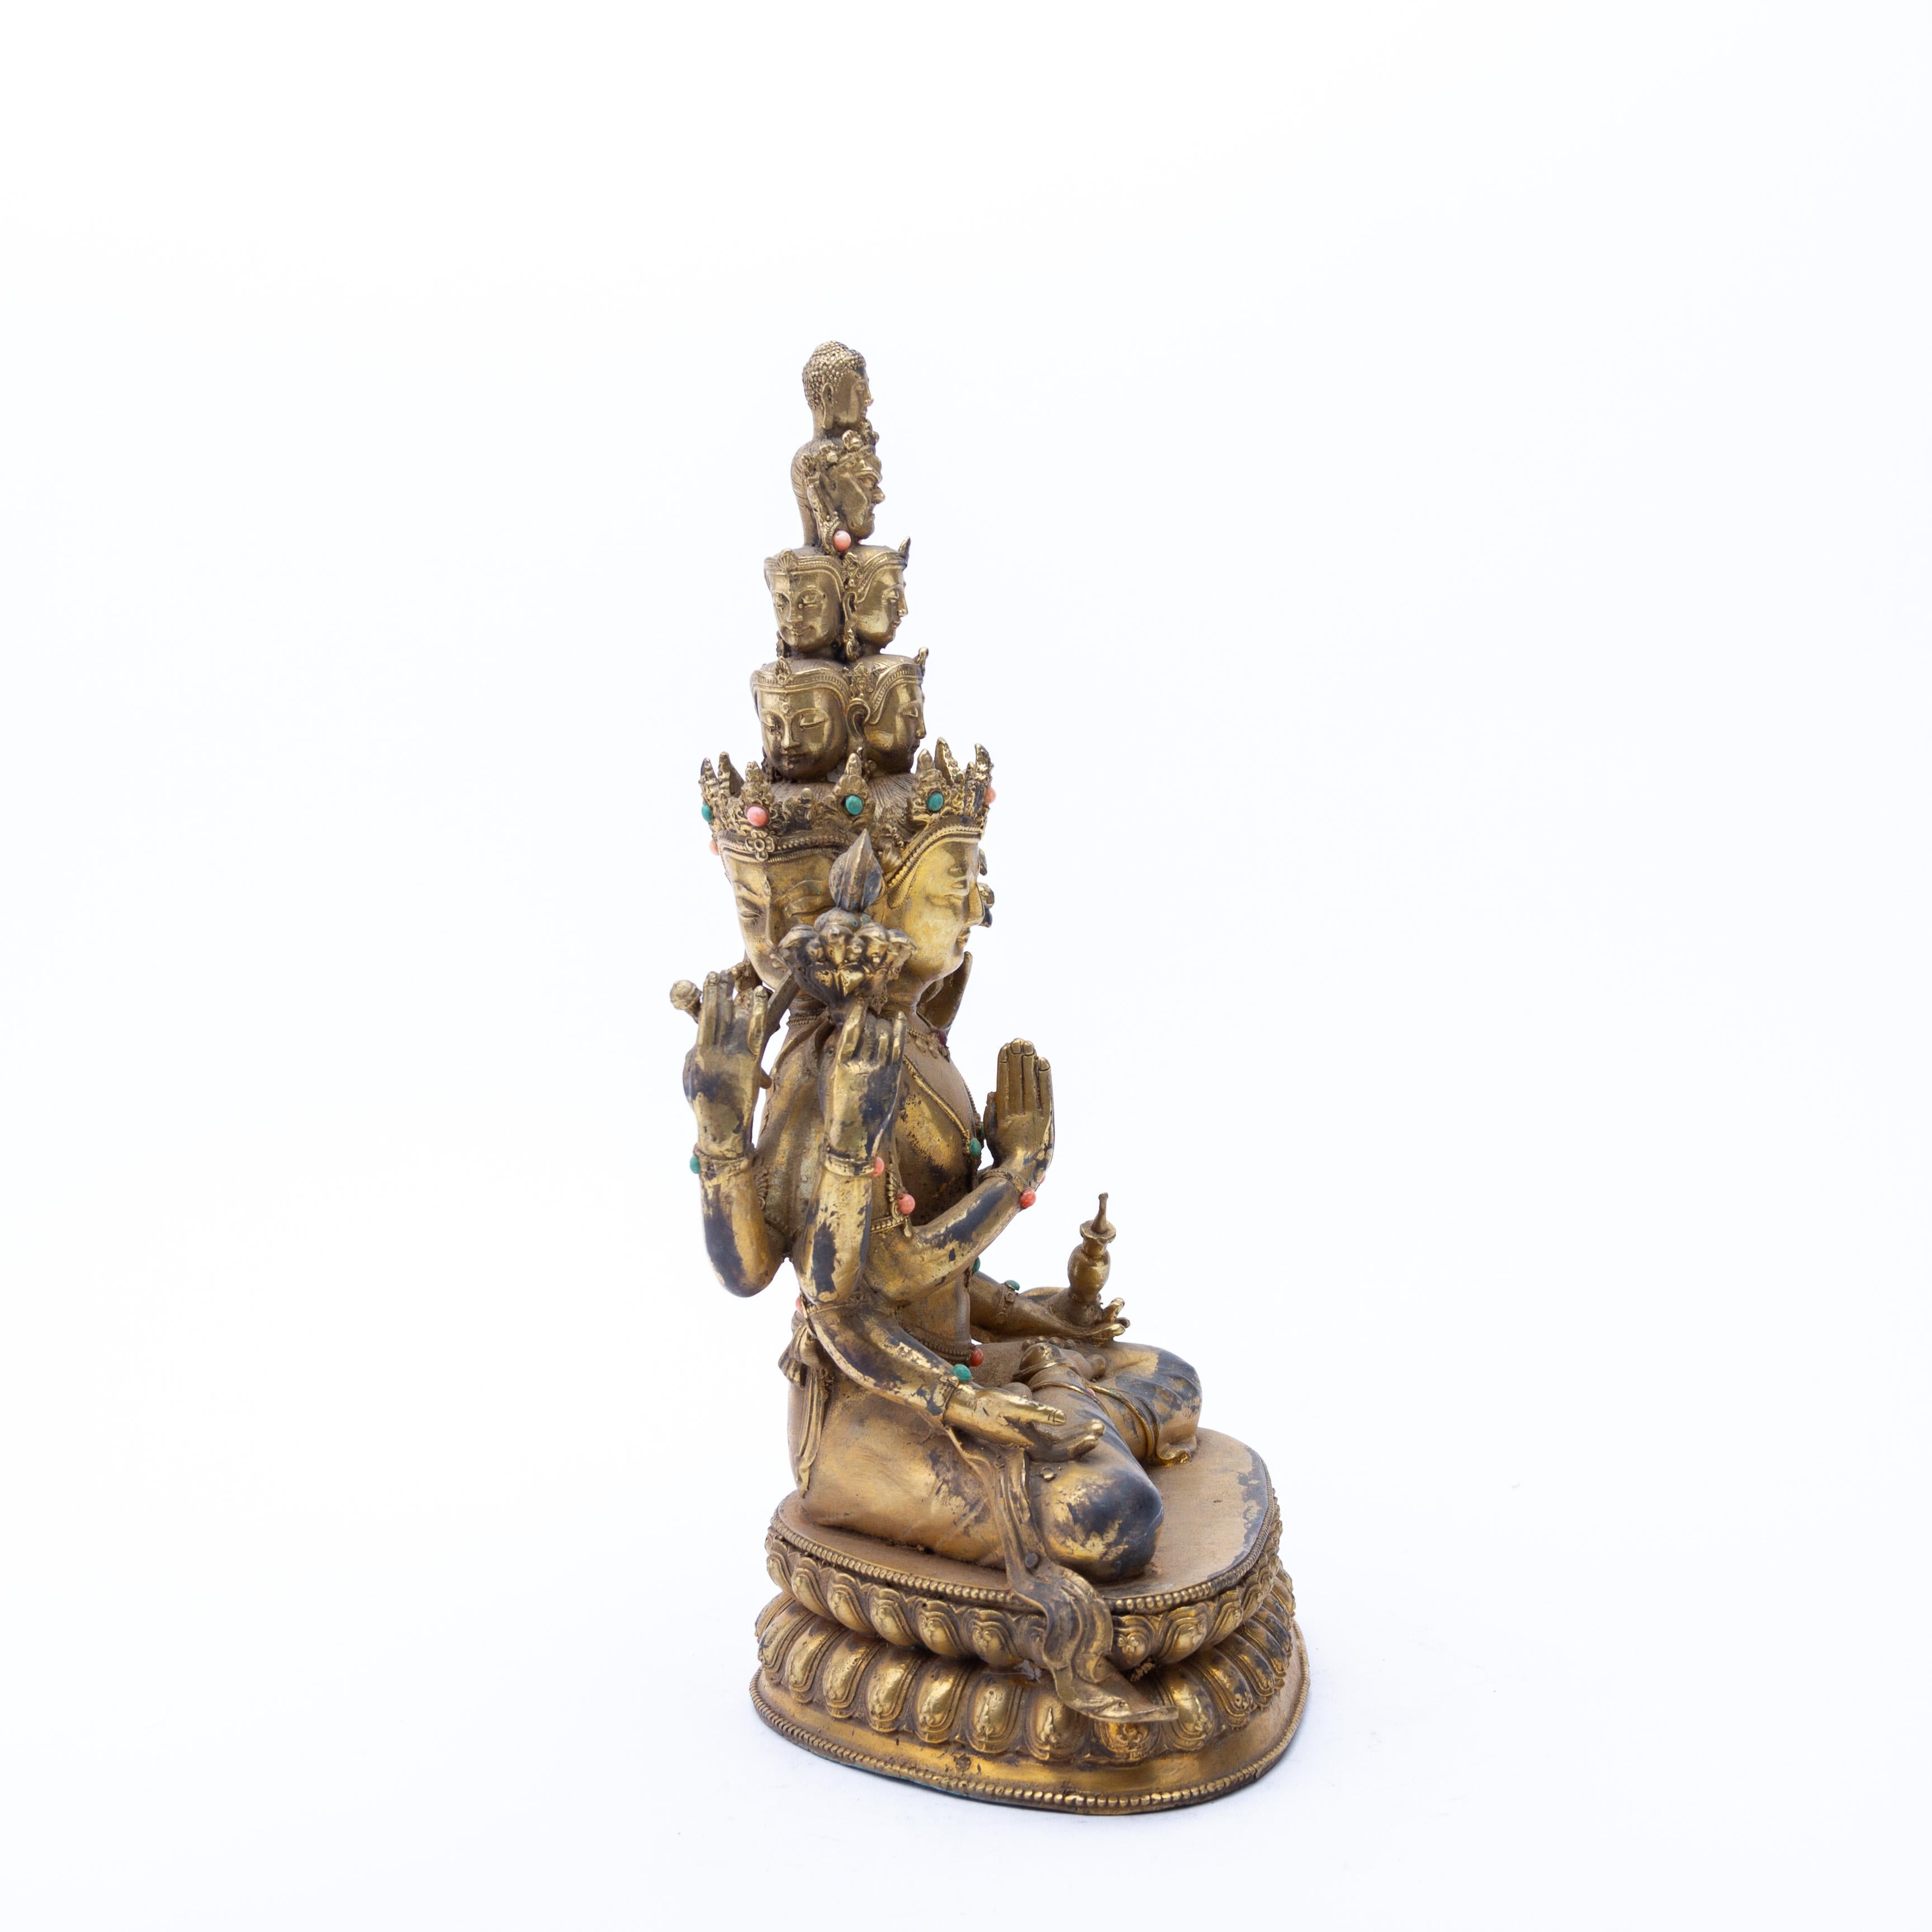 Tibetan Gilt Bronze Hindu Buddhist Sculpture of Guanyin Bodhisattva Late 19th C
Good condition
Free international shipping.